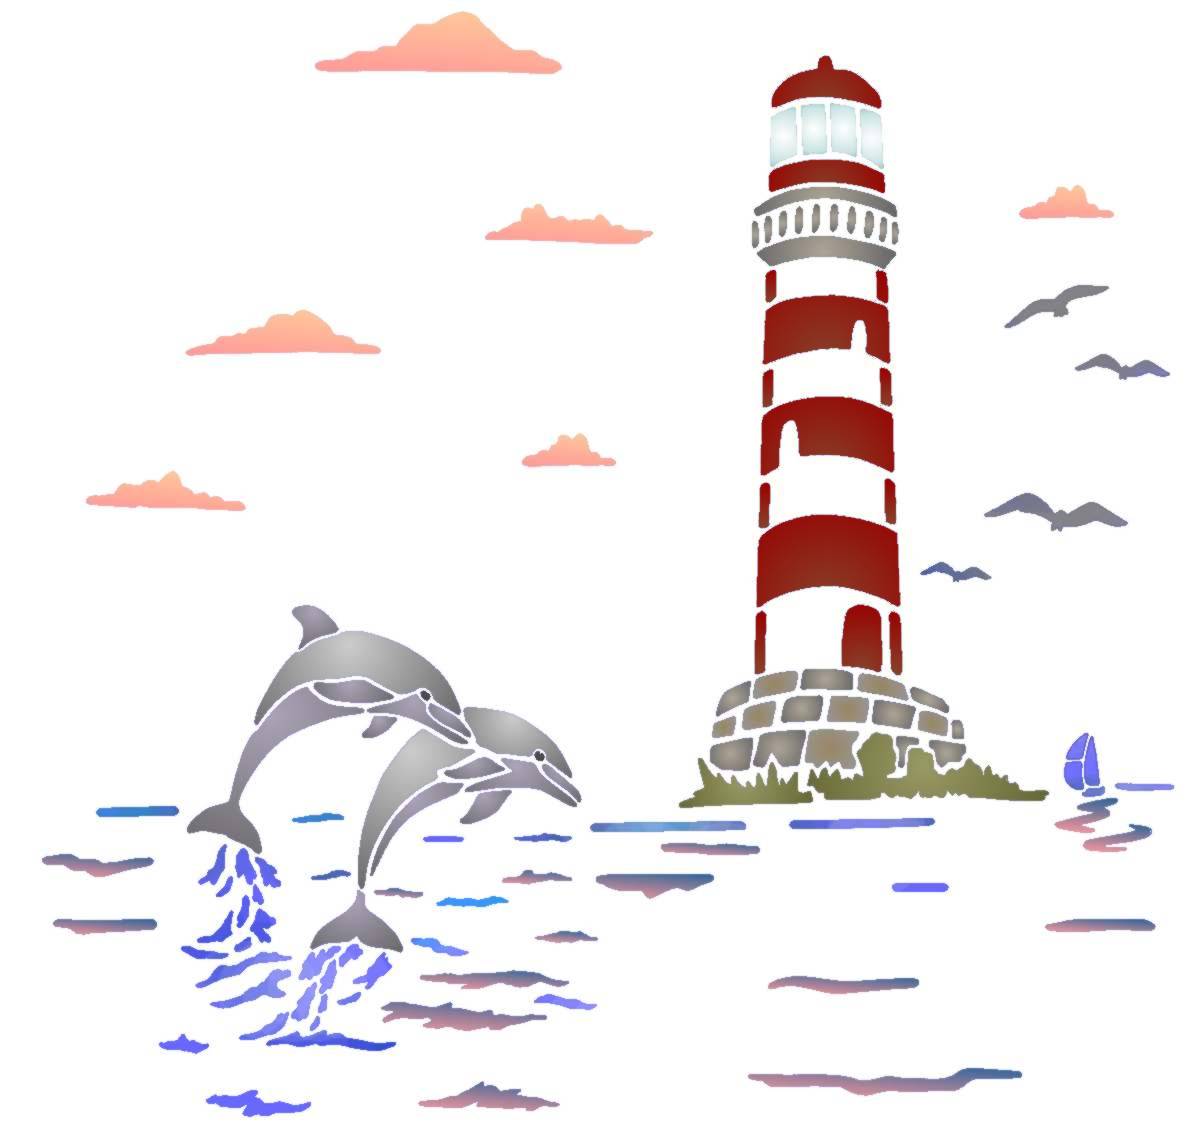 Spmu051 paysage marin phare dauphins style pochoir